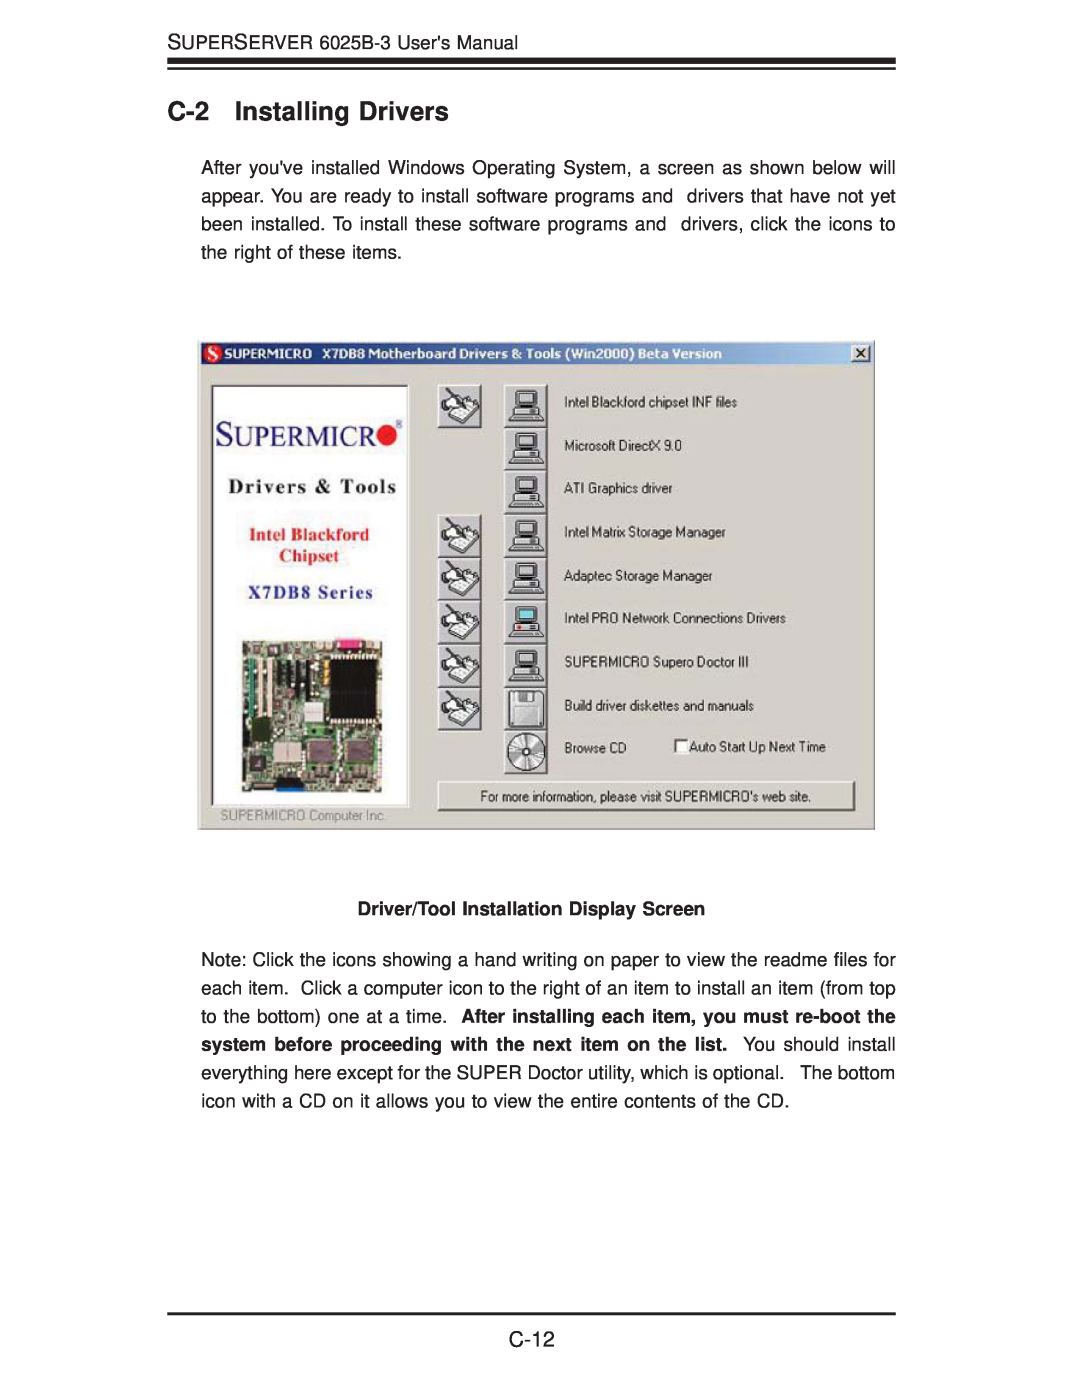 SUPER MICRO Computer 6025B-3R user manual C-2 Installing Drivers, C-12, Driver/Tool Installation Display Screen 